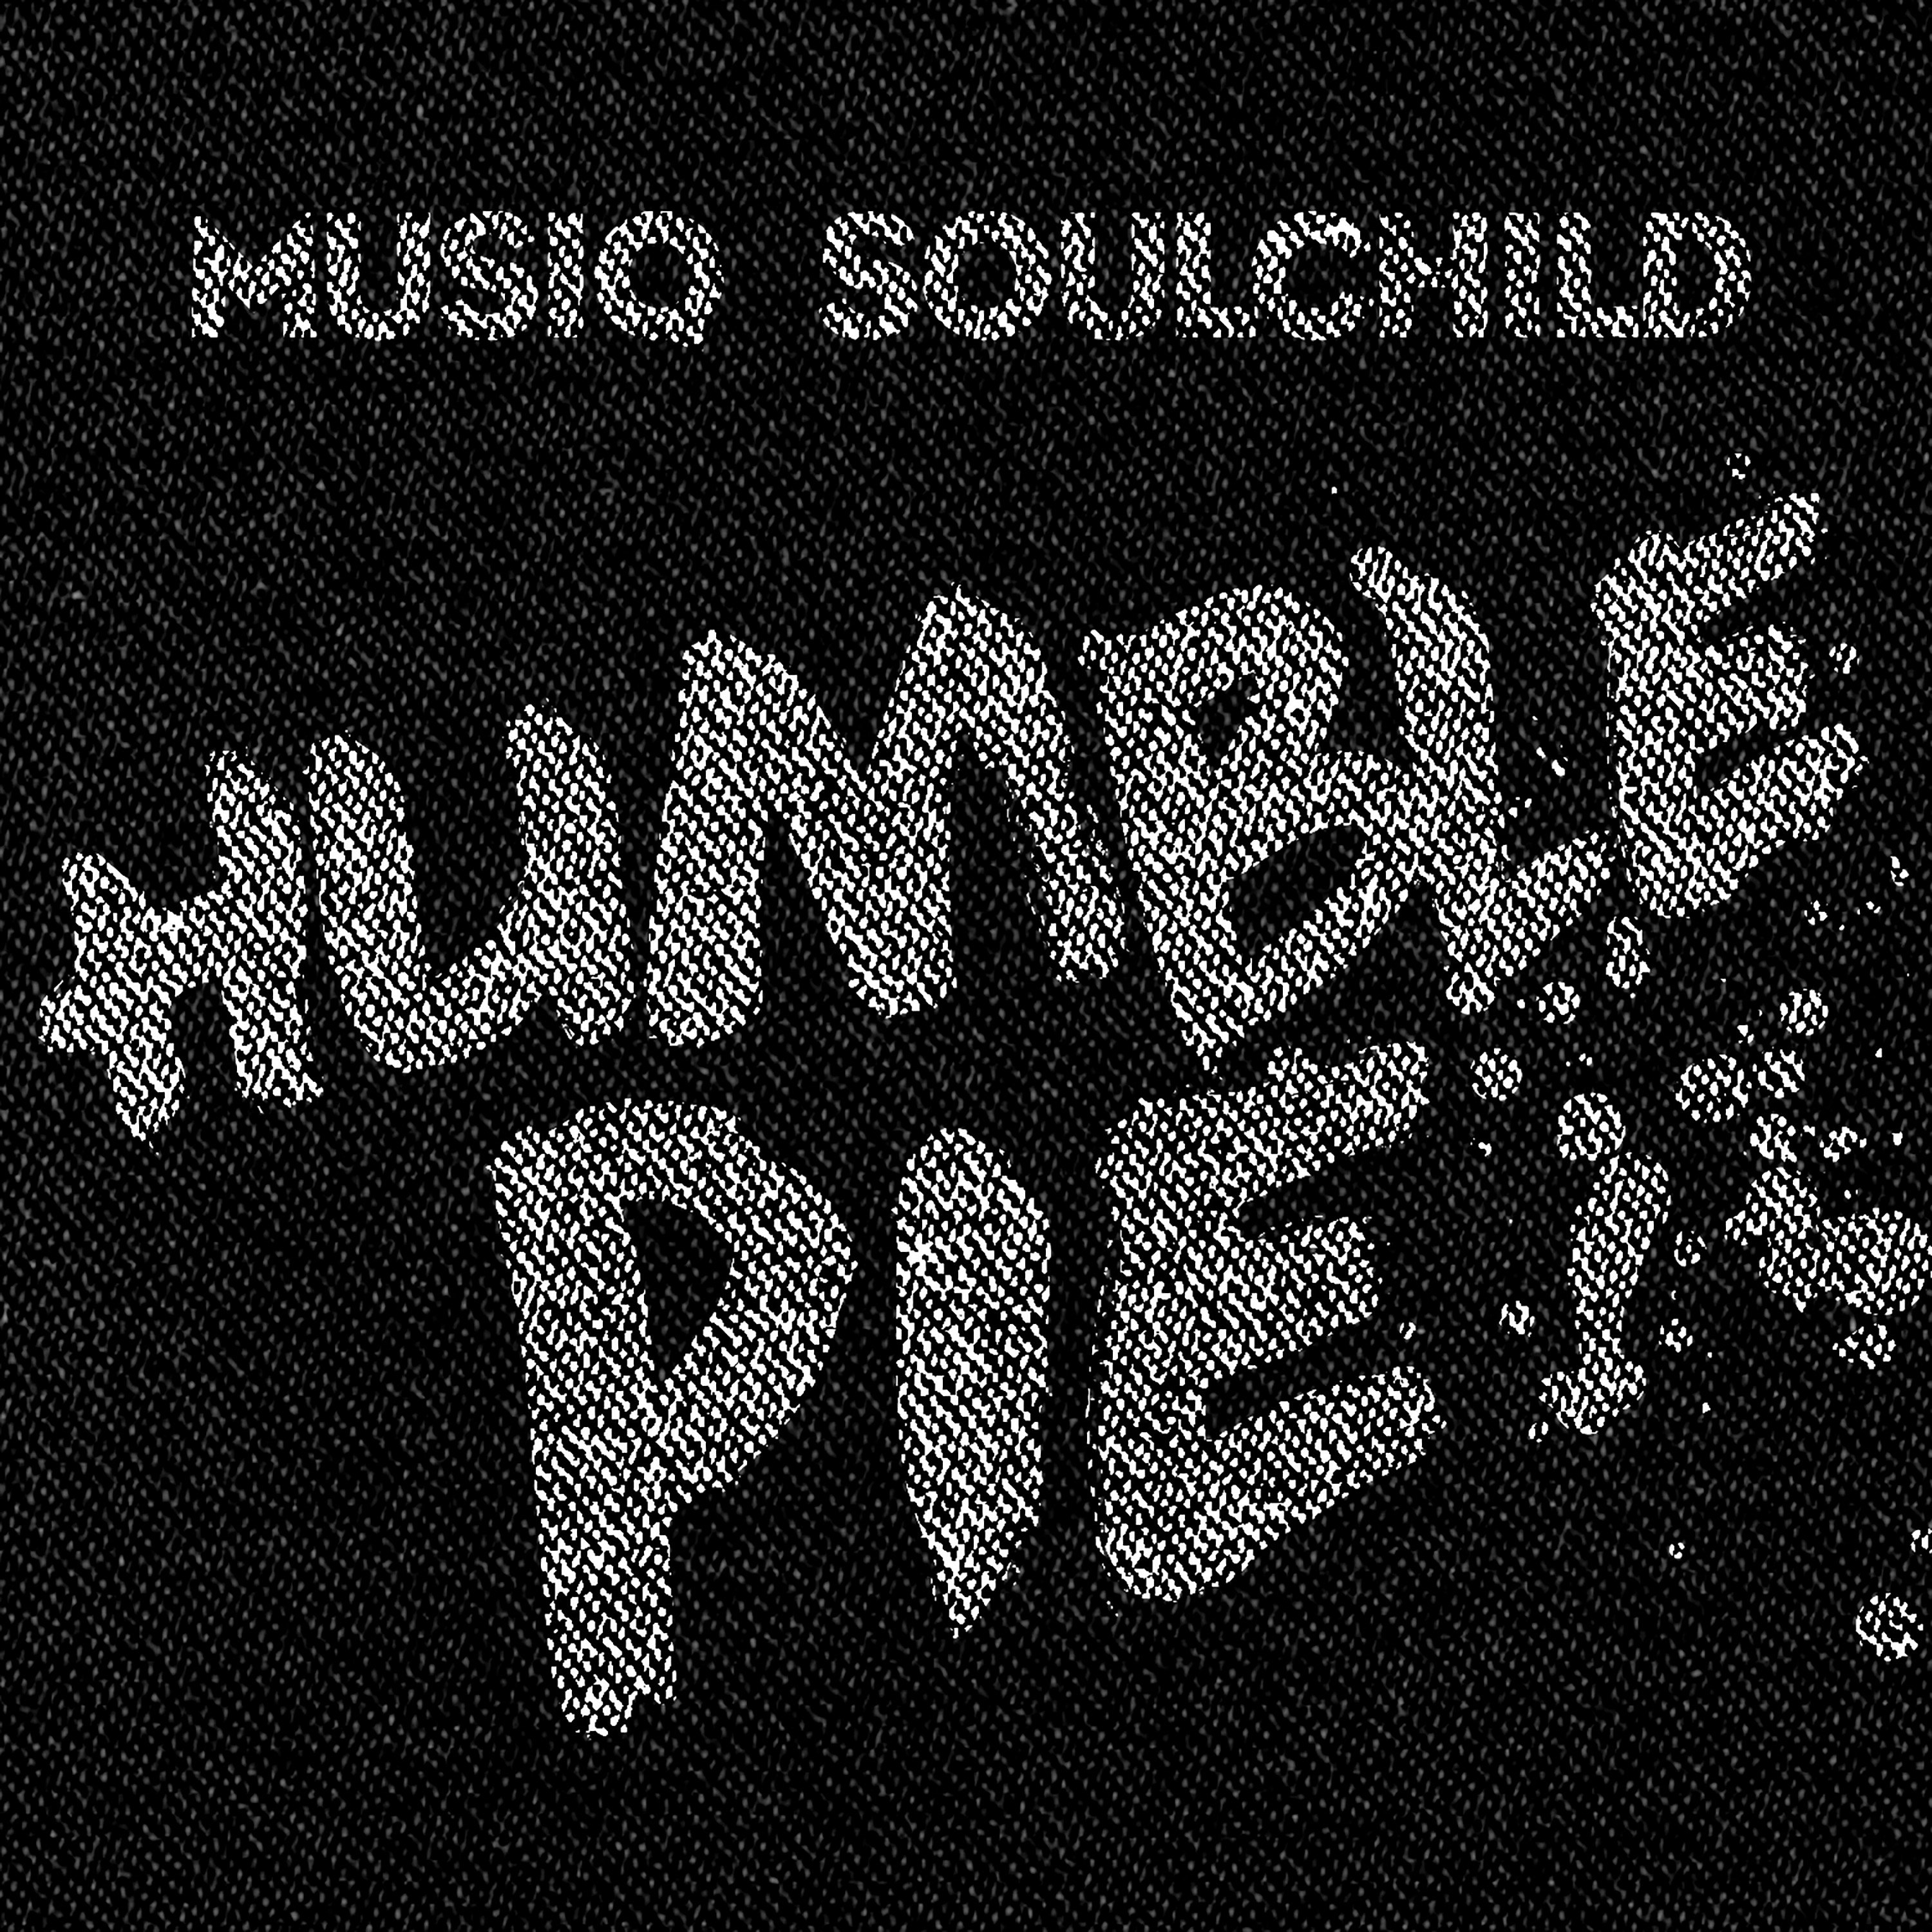 New Video: Musiq Soulchild - Humble Pie